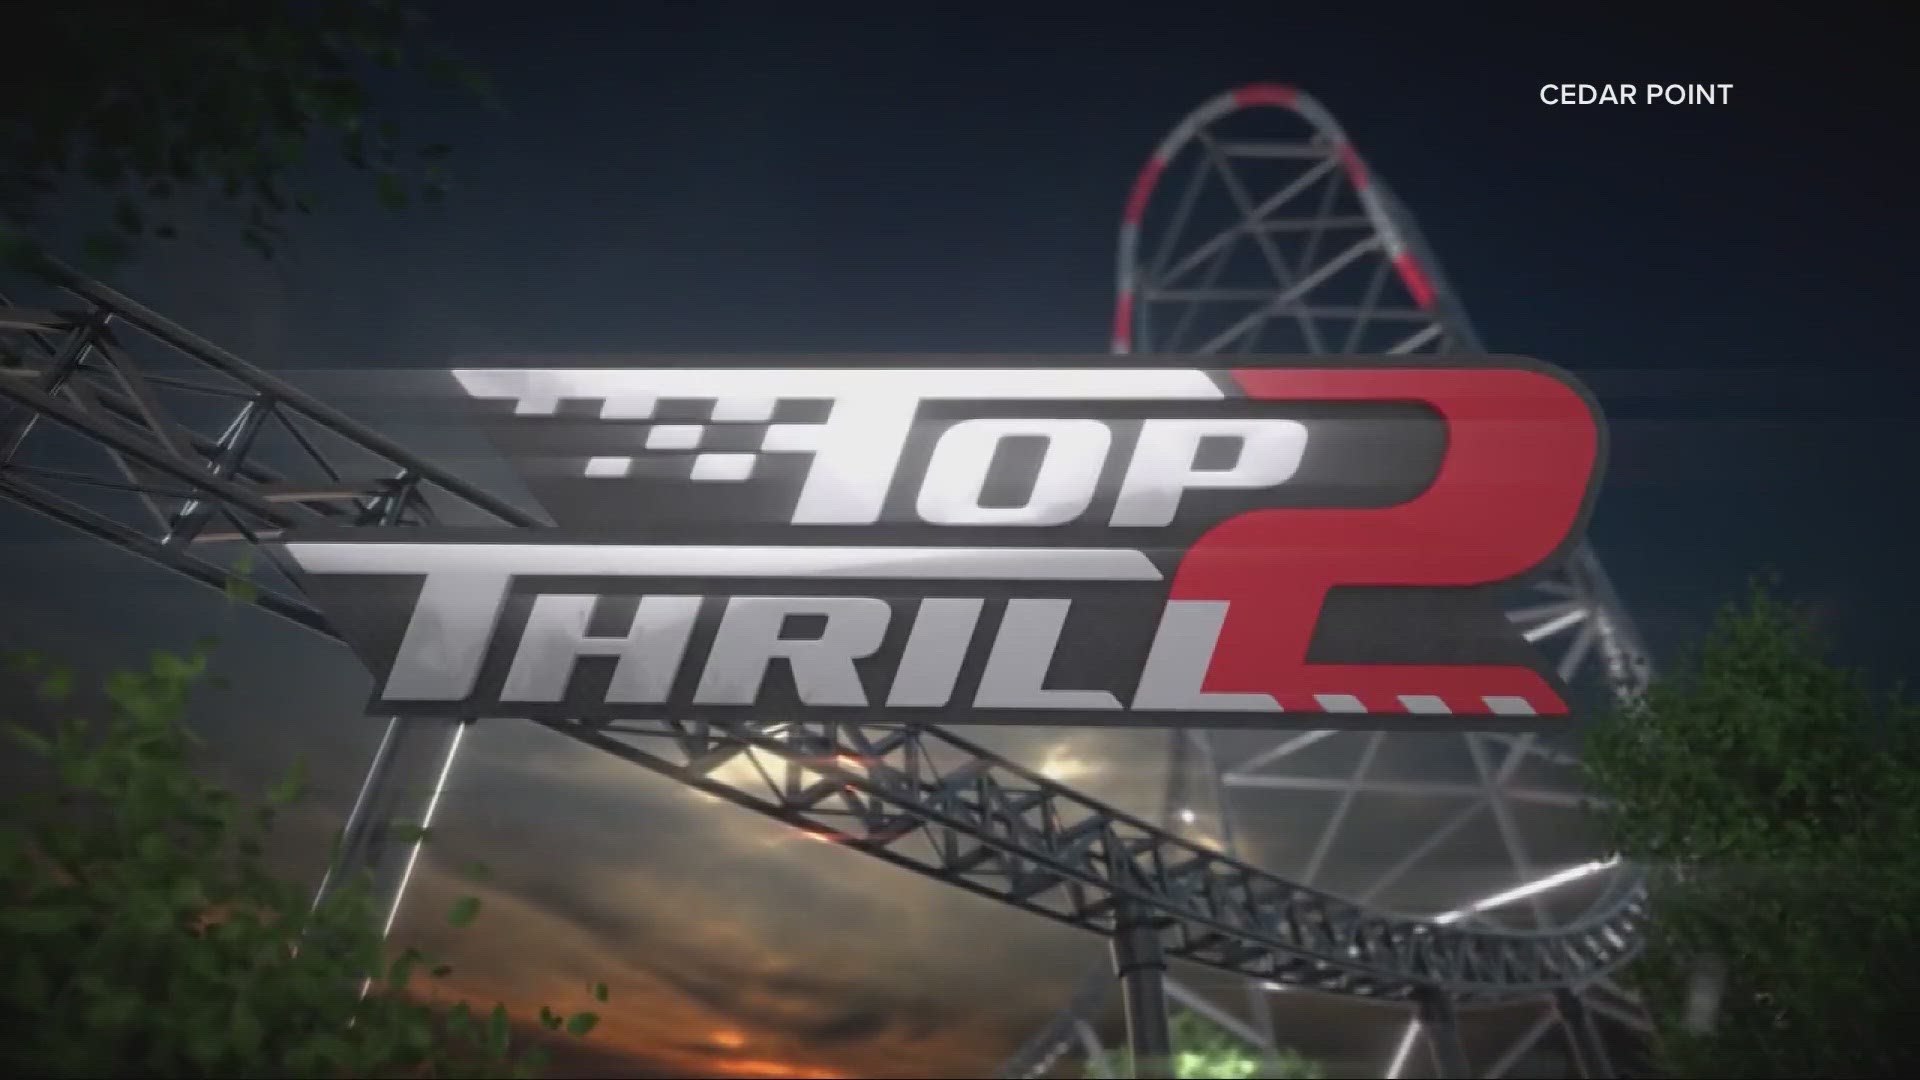 Cedar Point Top Thrill 2 spike tower construction video